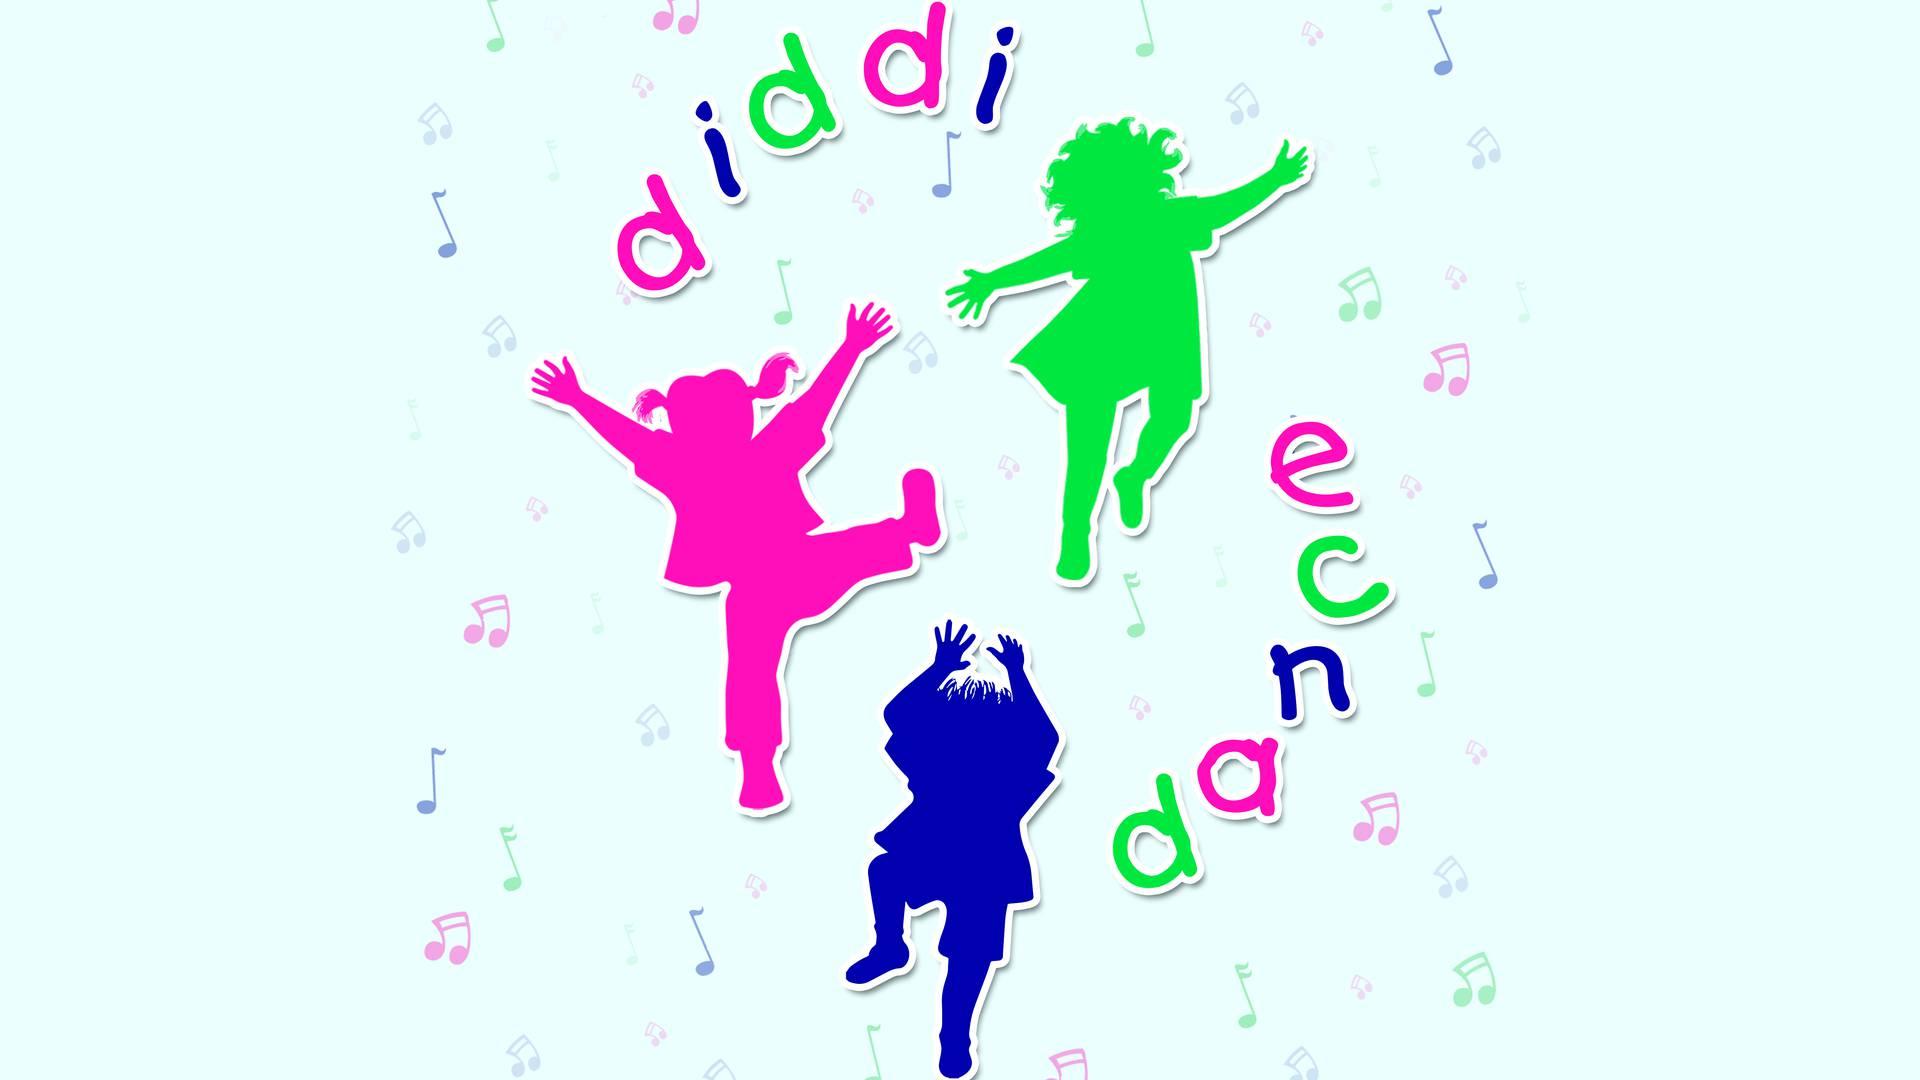 diddi dance photo